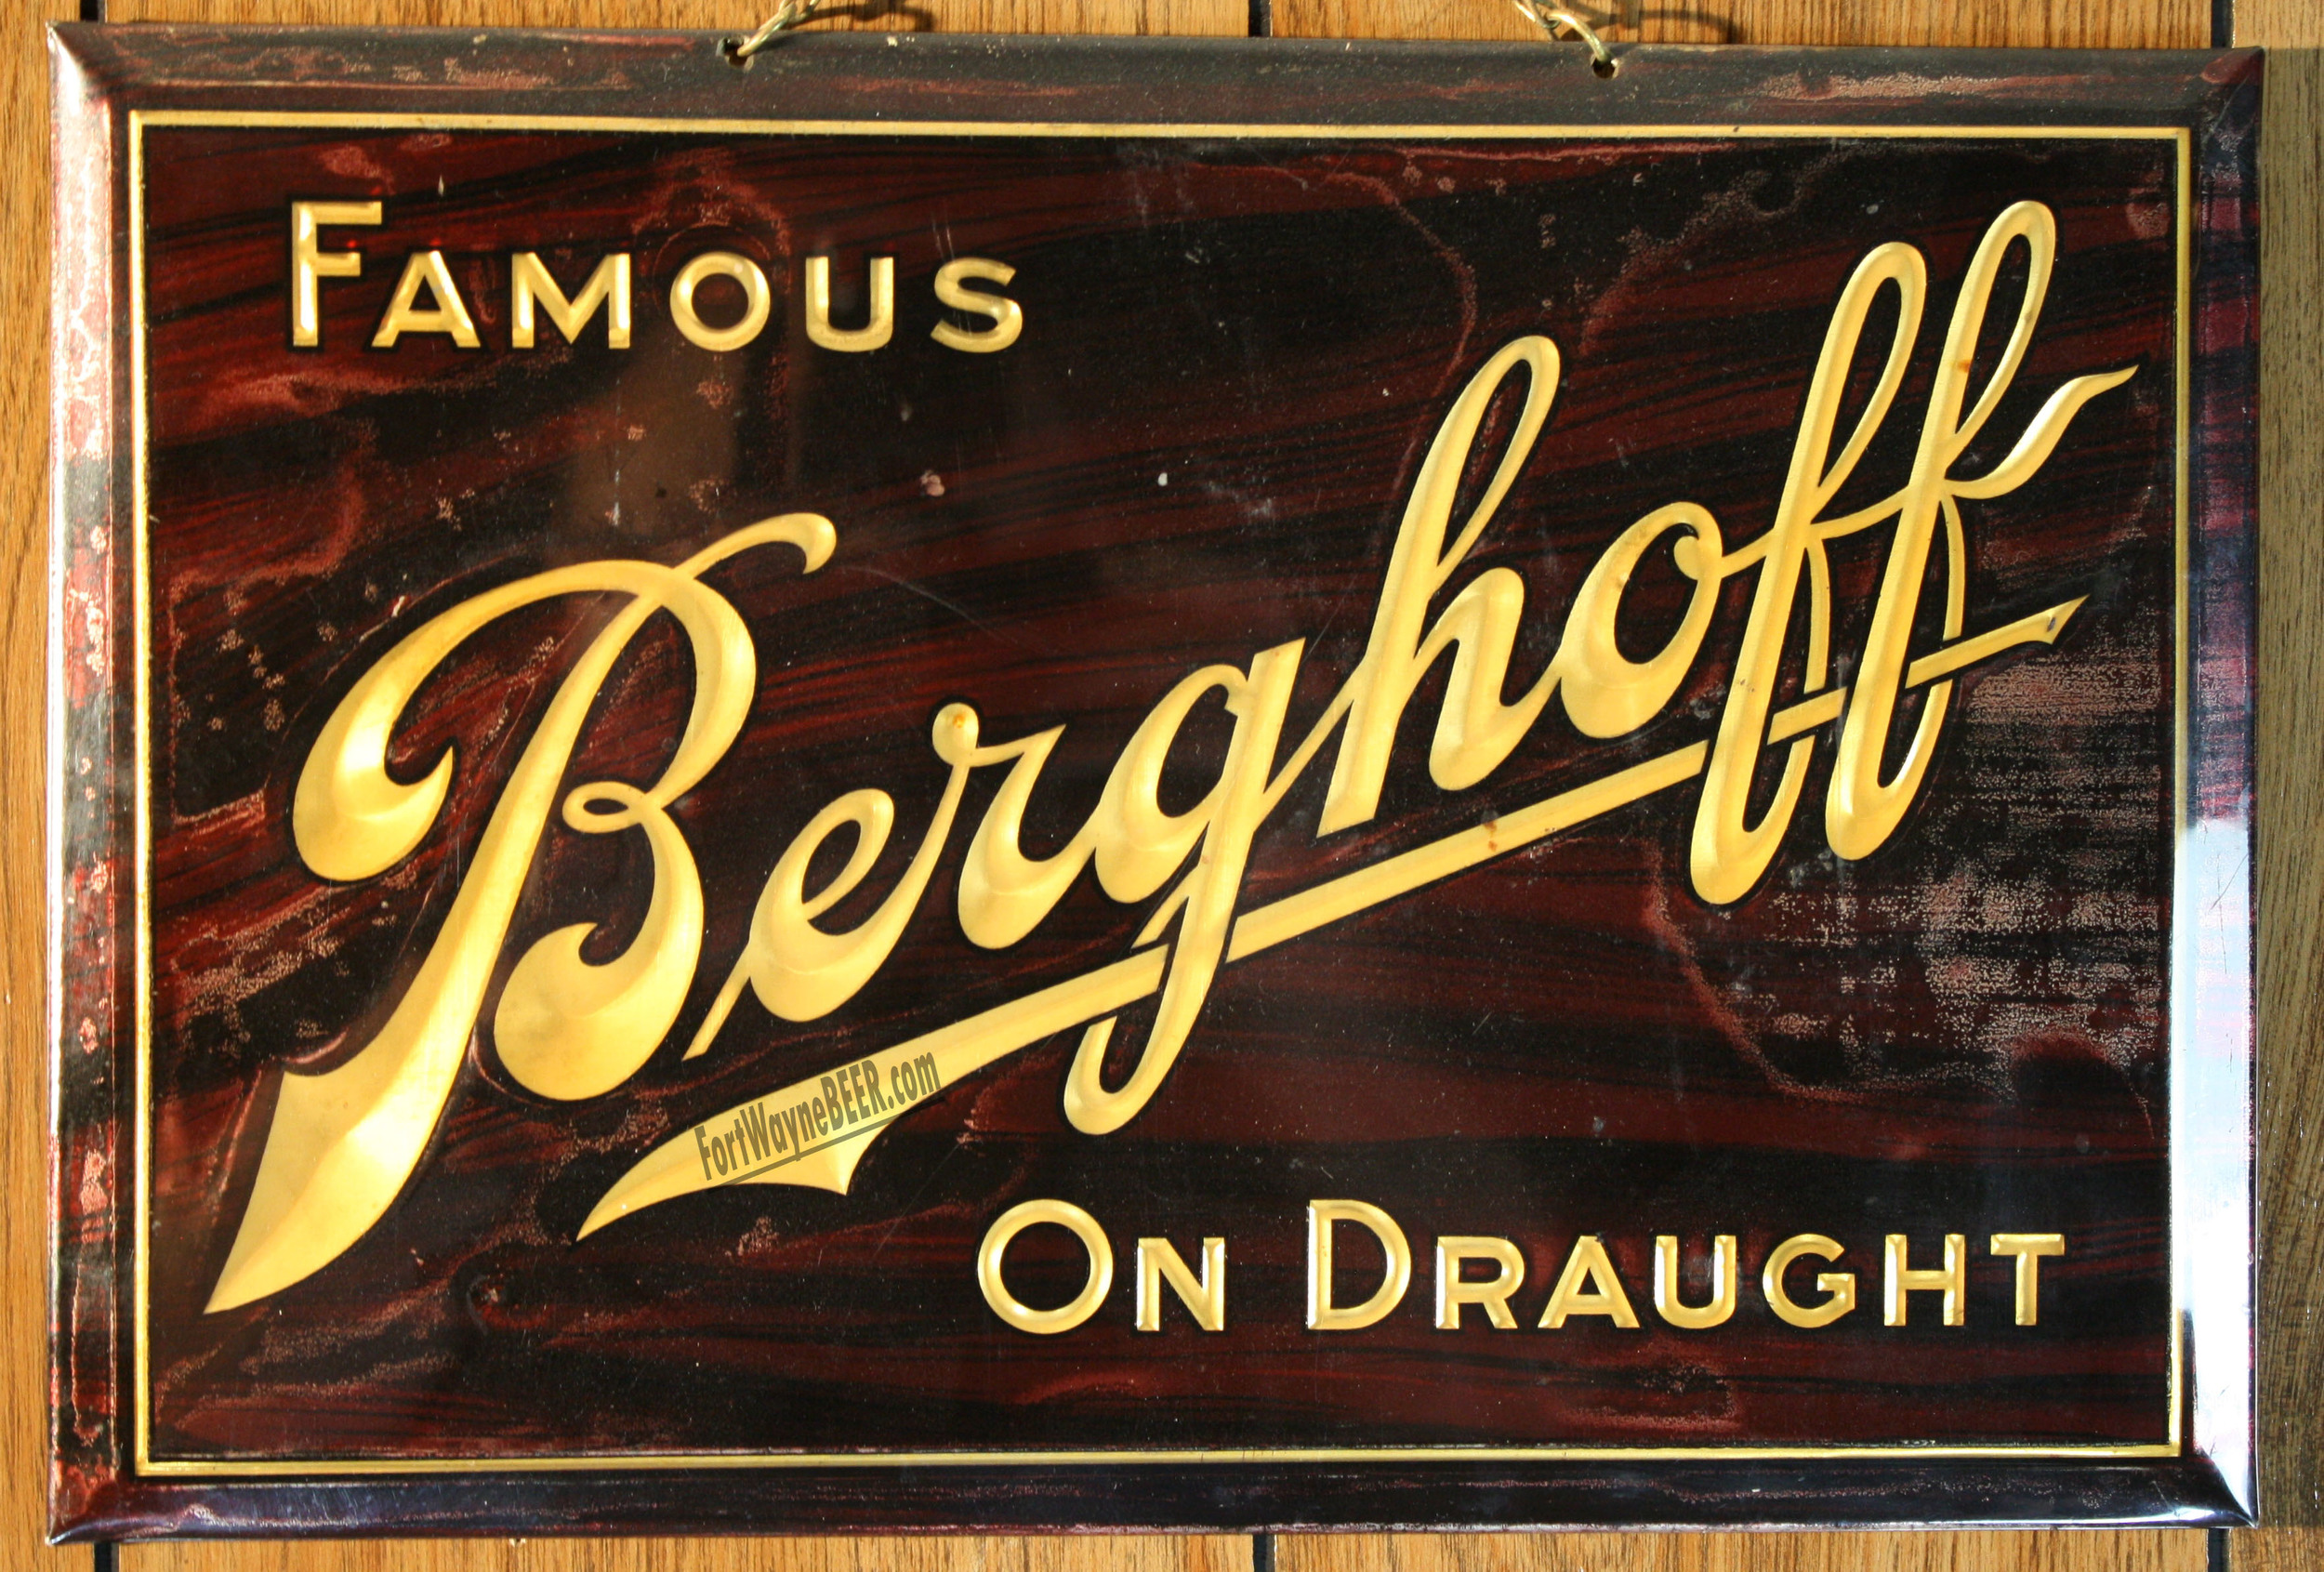 HERMAN BERGHOFF BREWING FORT WAYNE,IN 9" x 12" Sign 